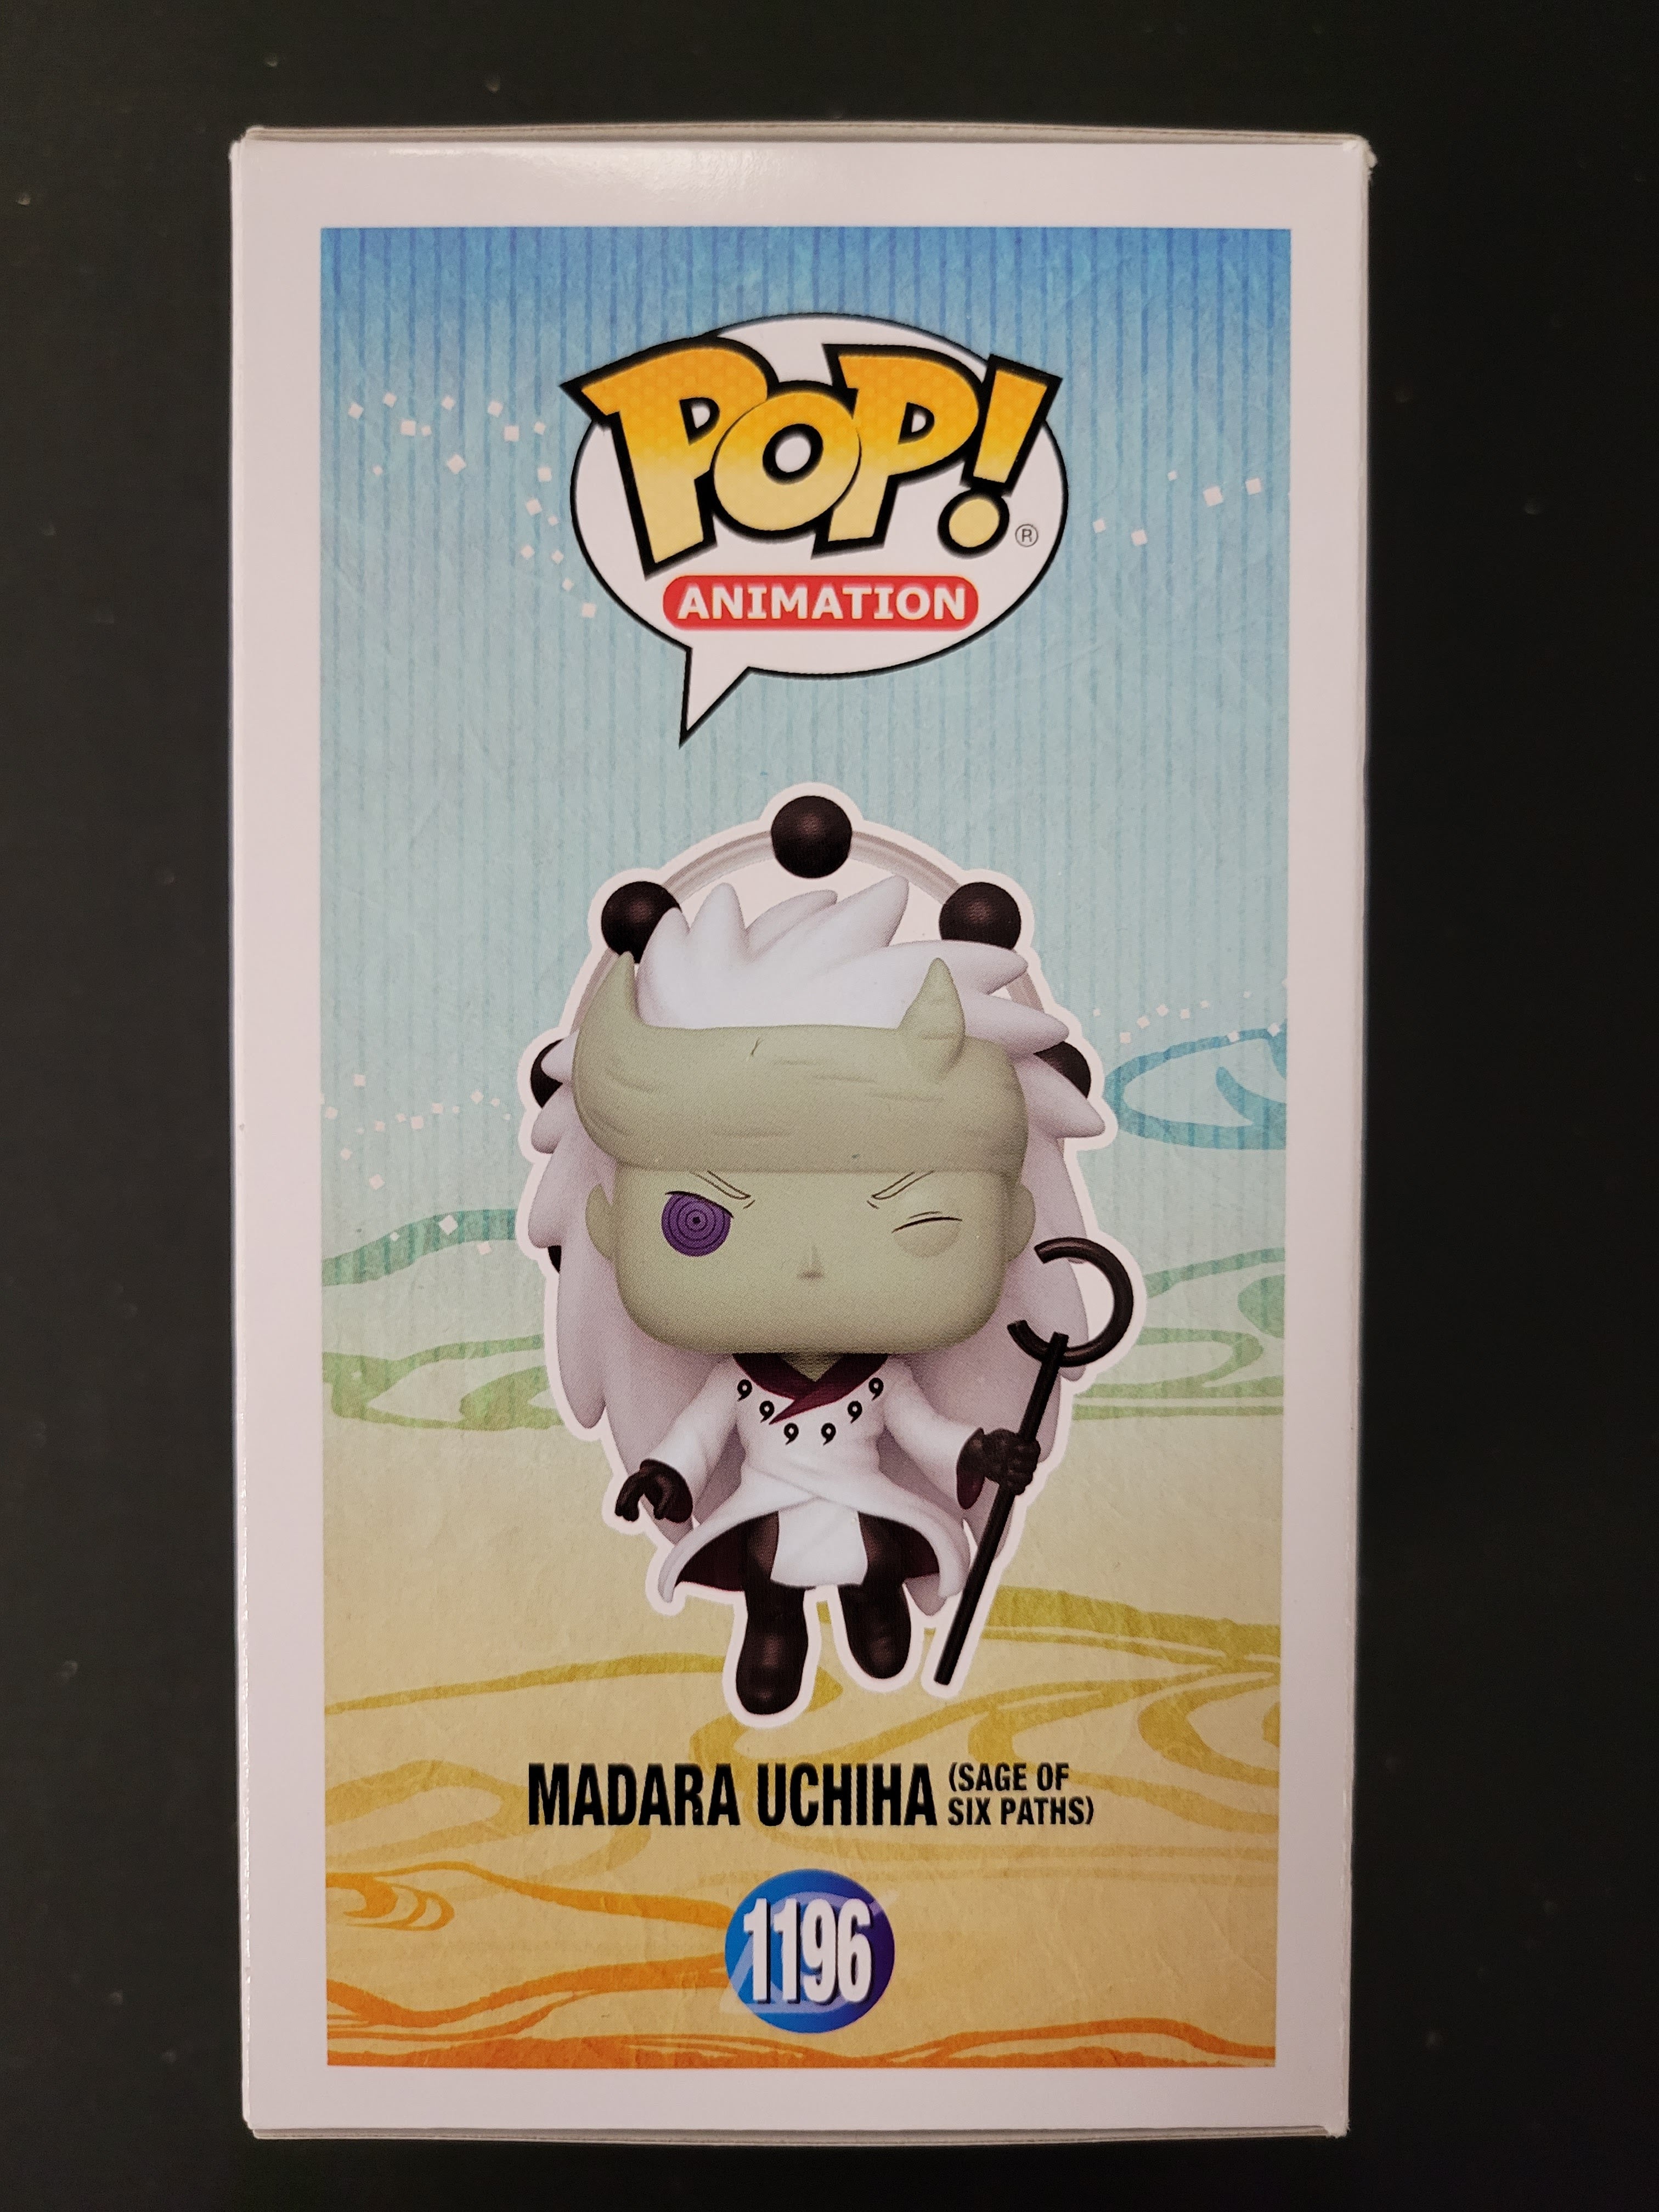 Funko Pop: #1196 Madara Uchiha From Naruto Signed By Neil Kaplan - JSA Cert 510